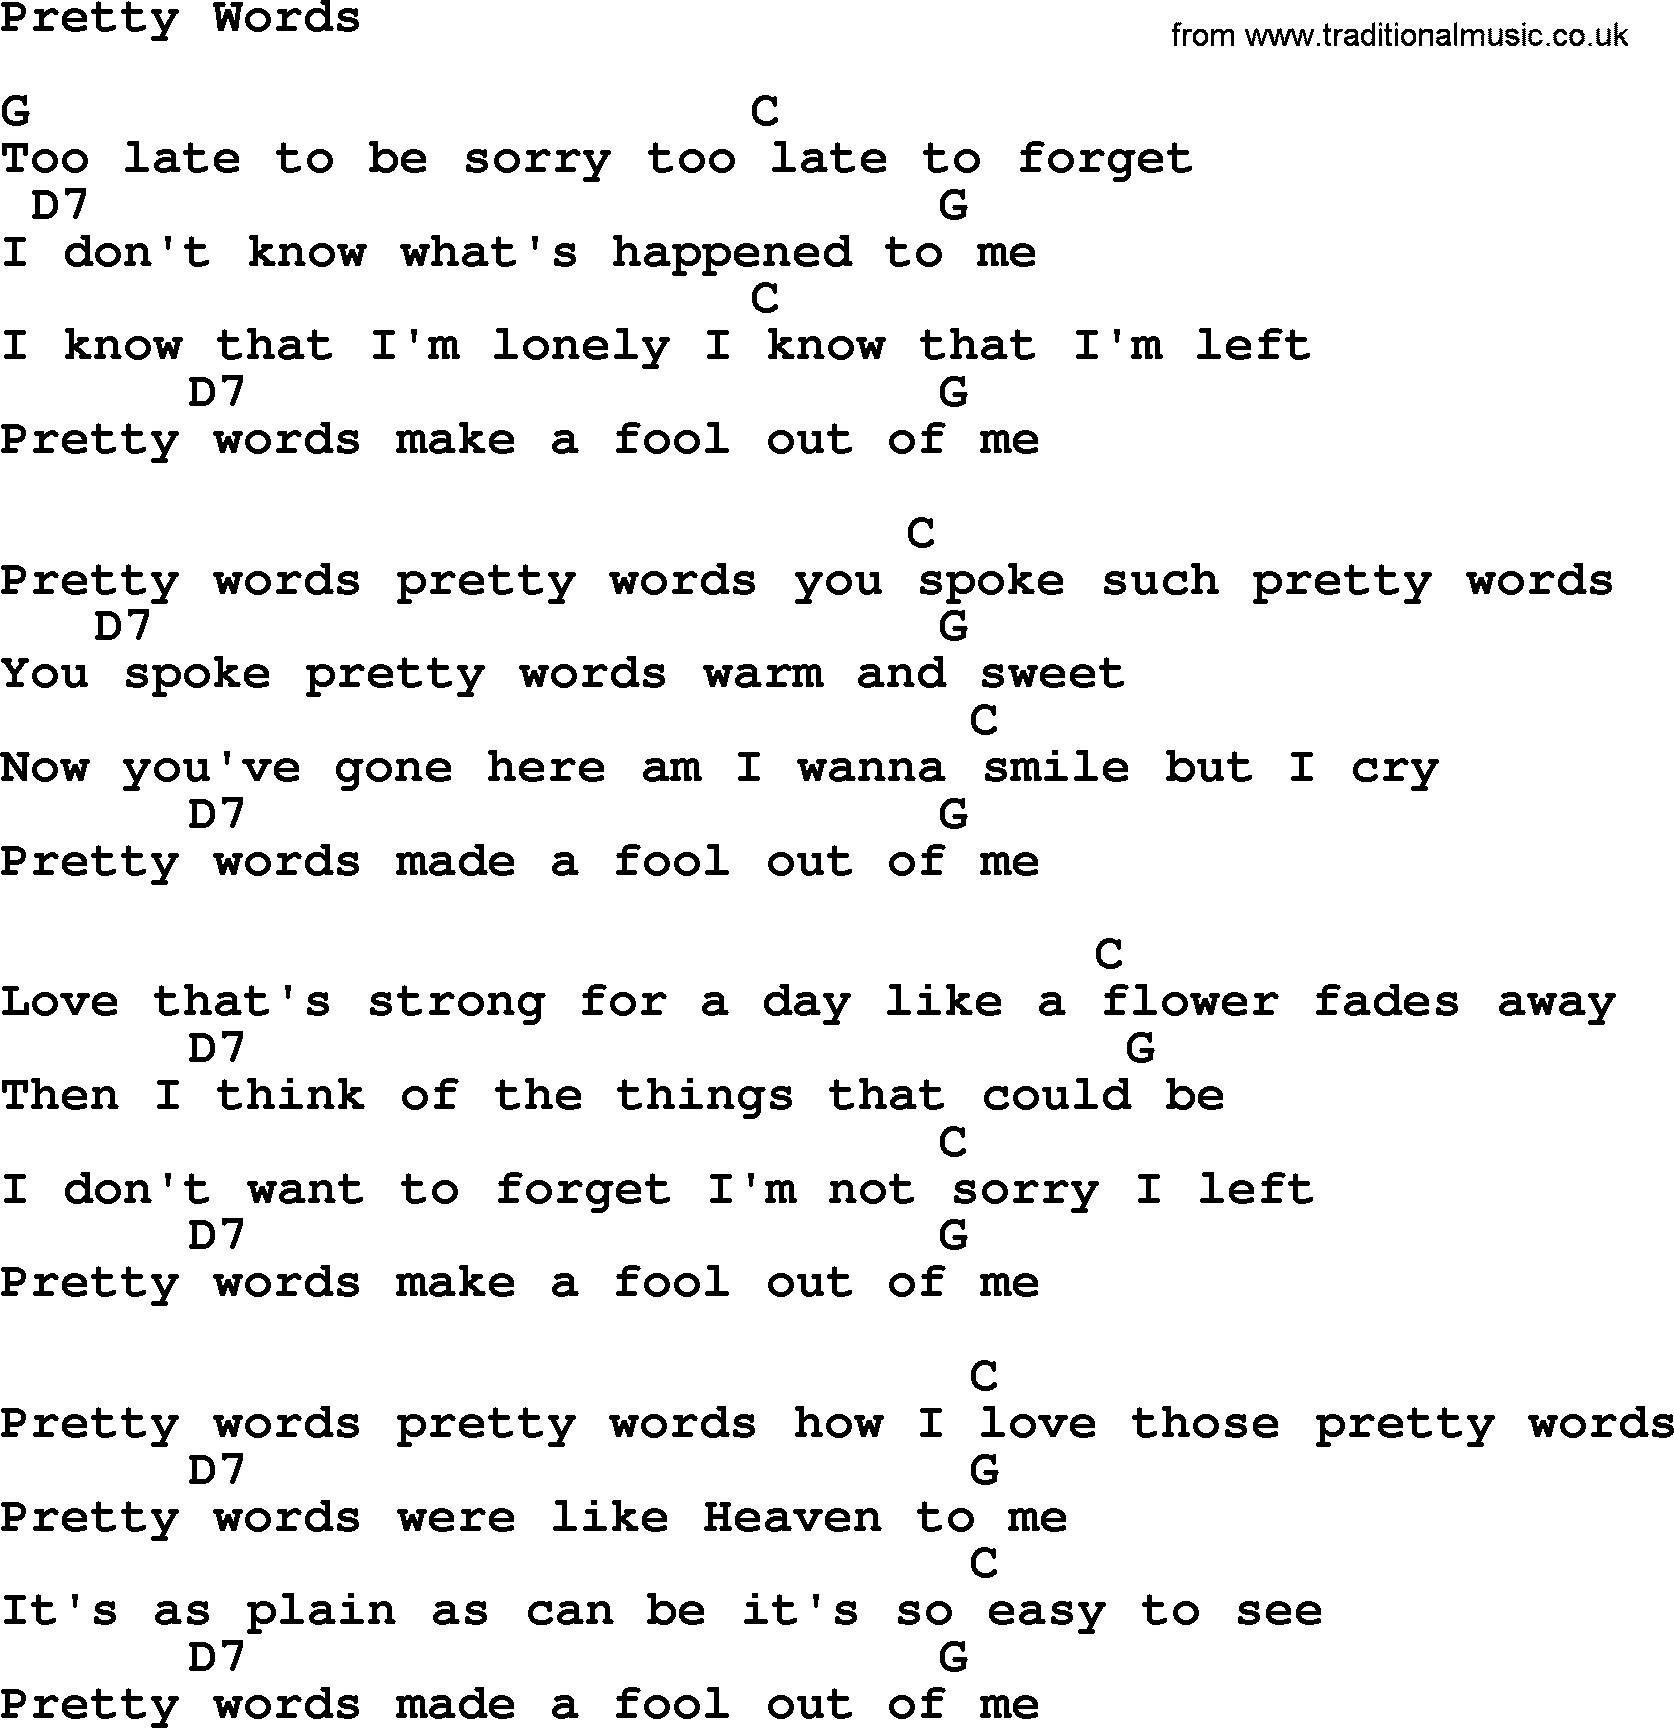 Marty Robbins song: Pretty Words, lyrics and chords